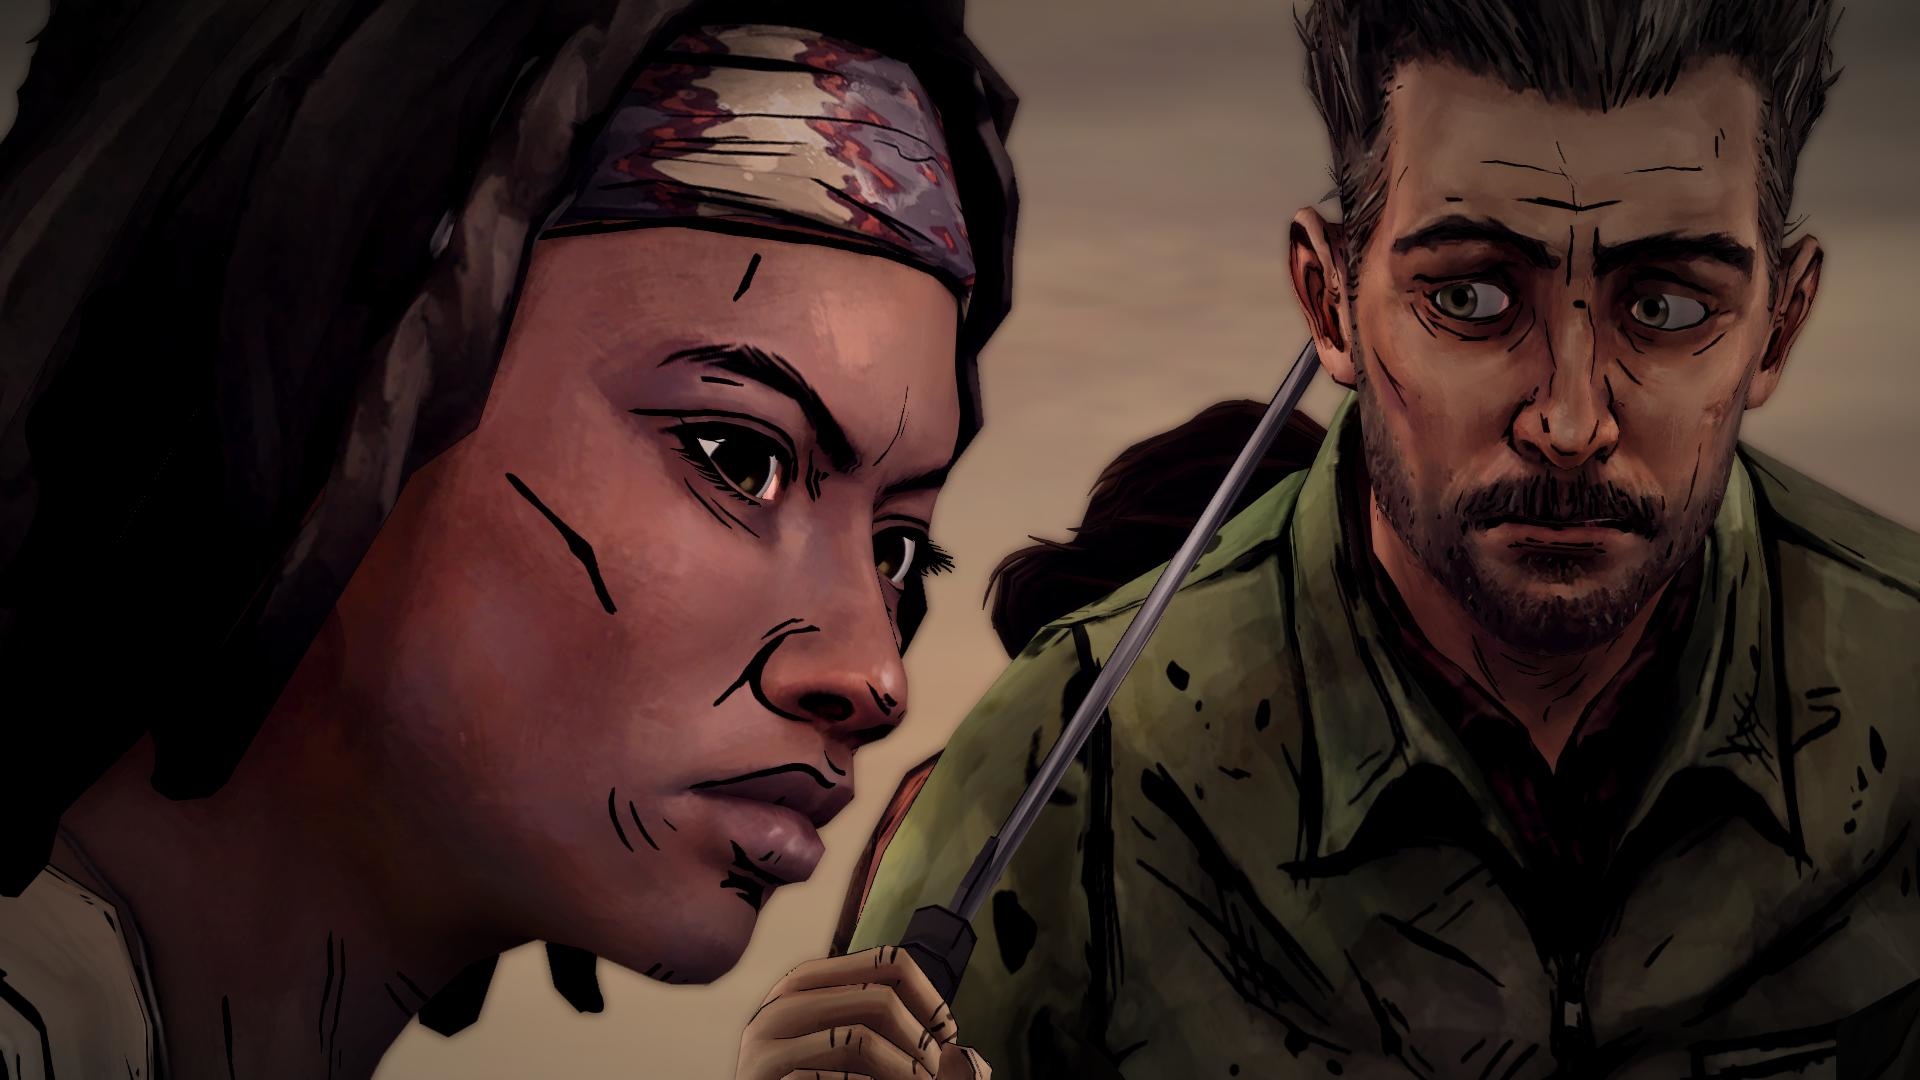 The Walking Dead: Michonne - In Too Deep Na scne sa objavuj nov priatelia aj nepriatelia.